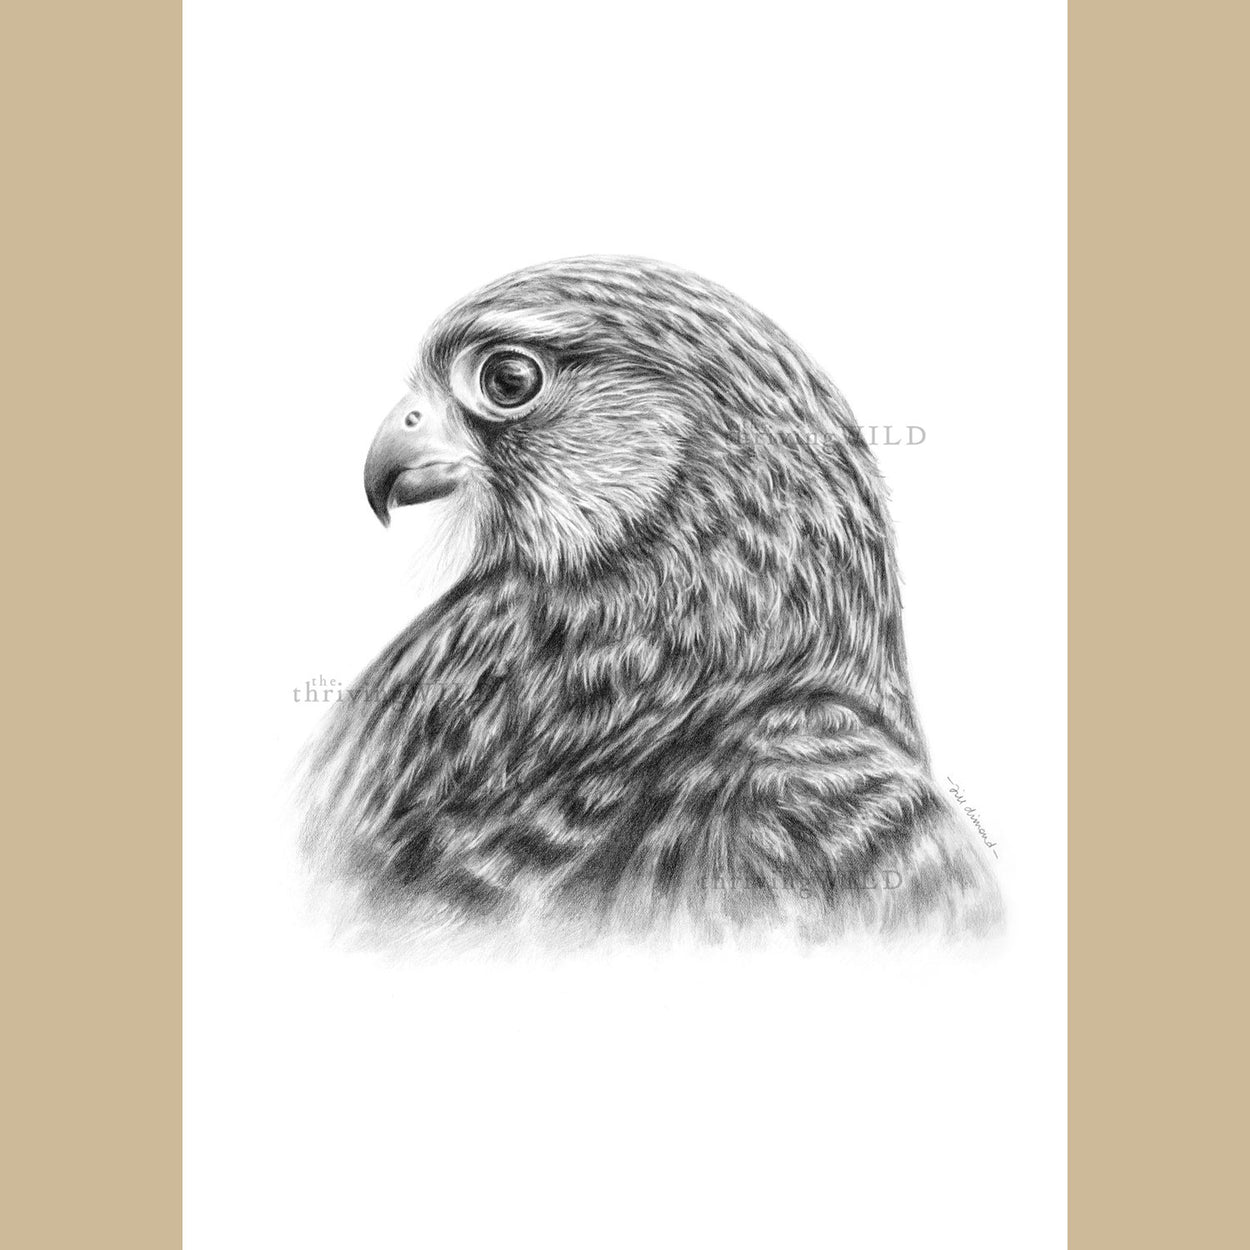 Female Kestrel Pencil Drawing Bird of Prey - The Thriving Wild - Jill Dimond